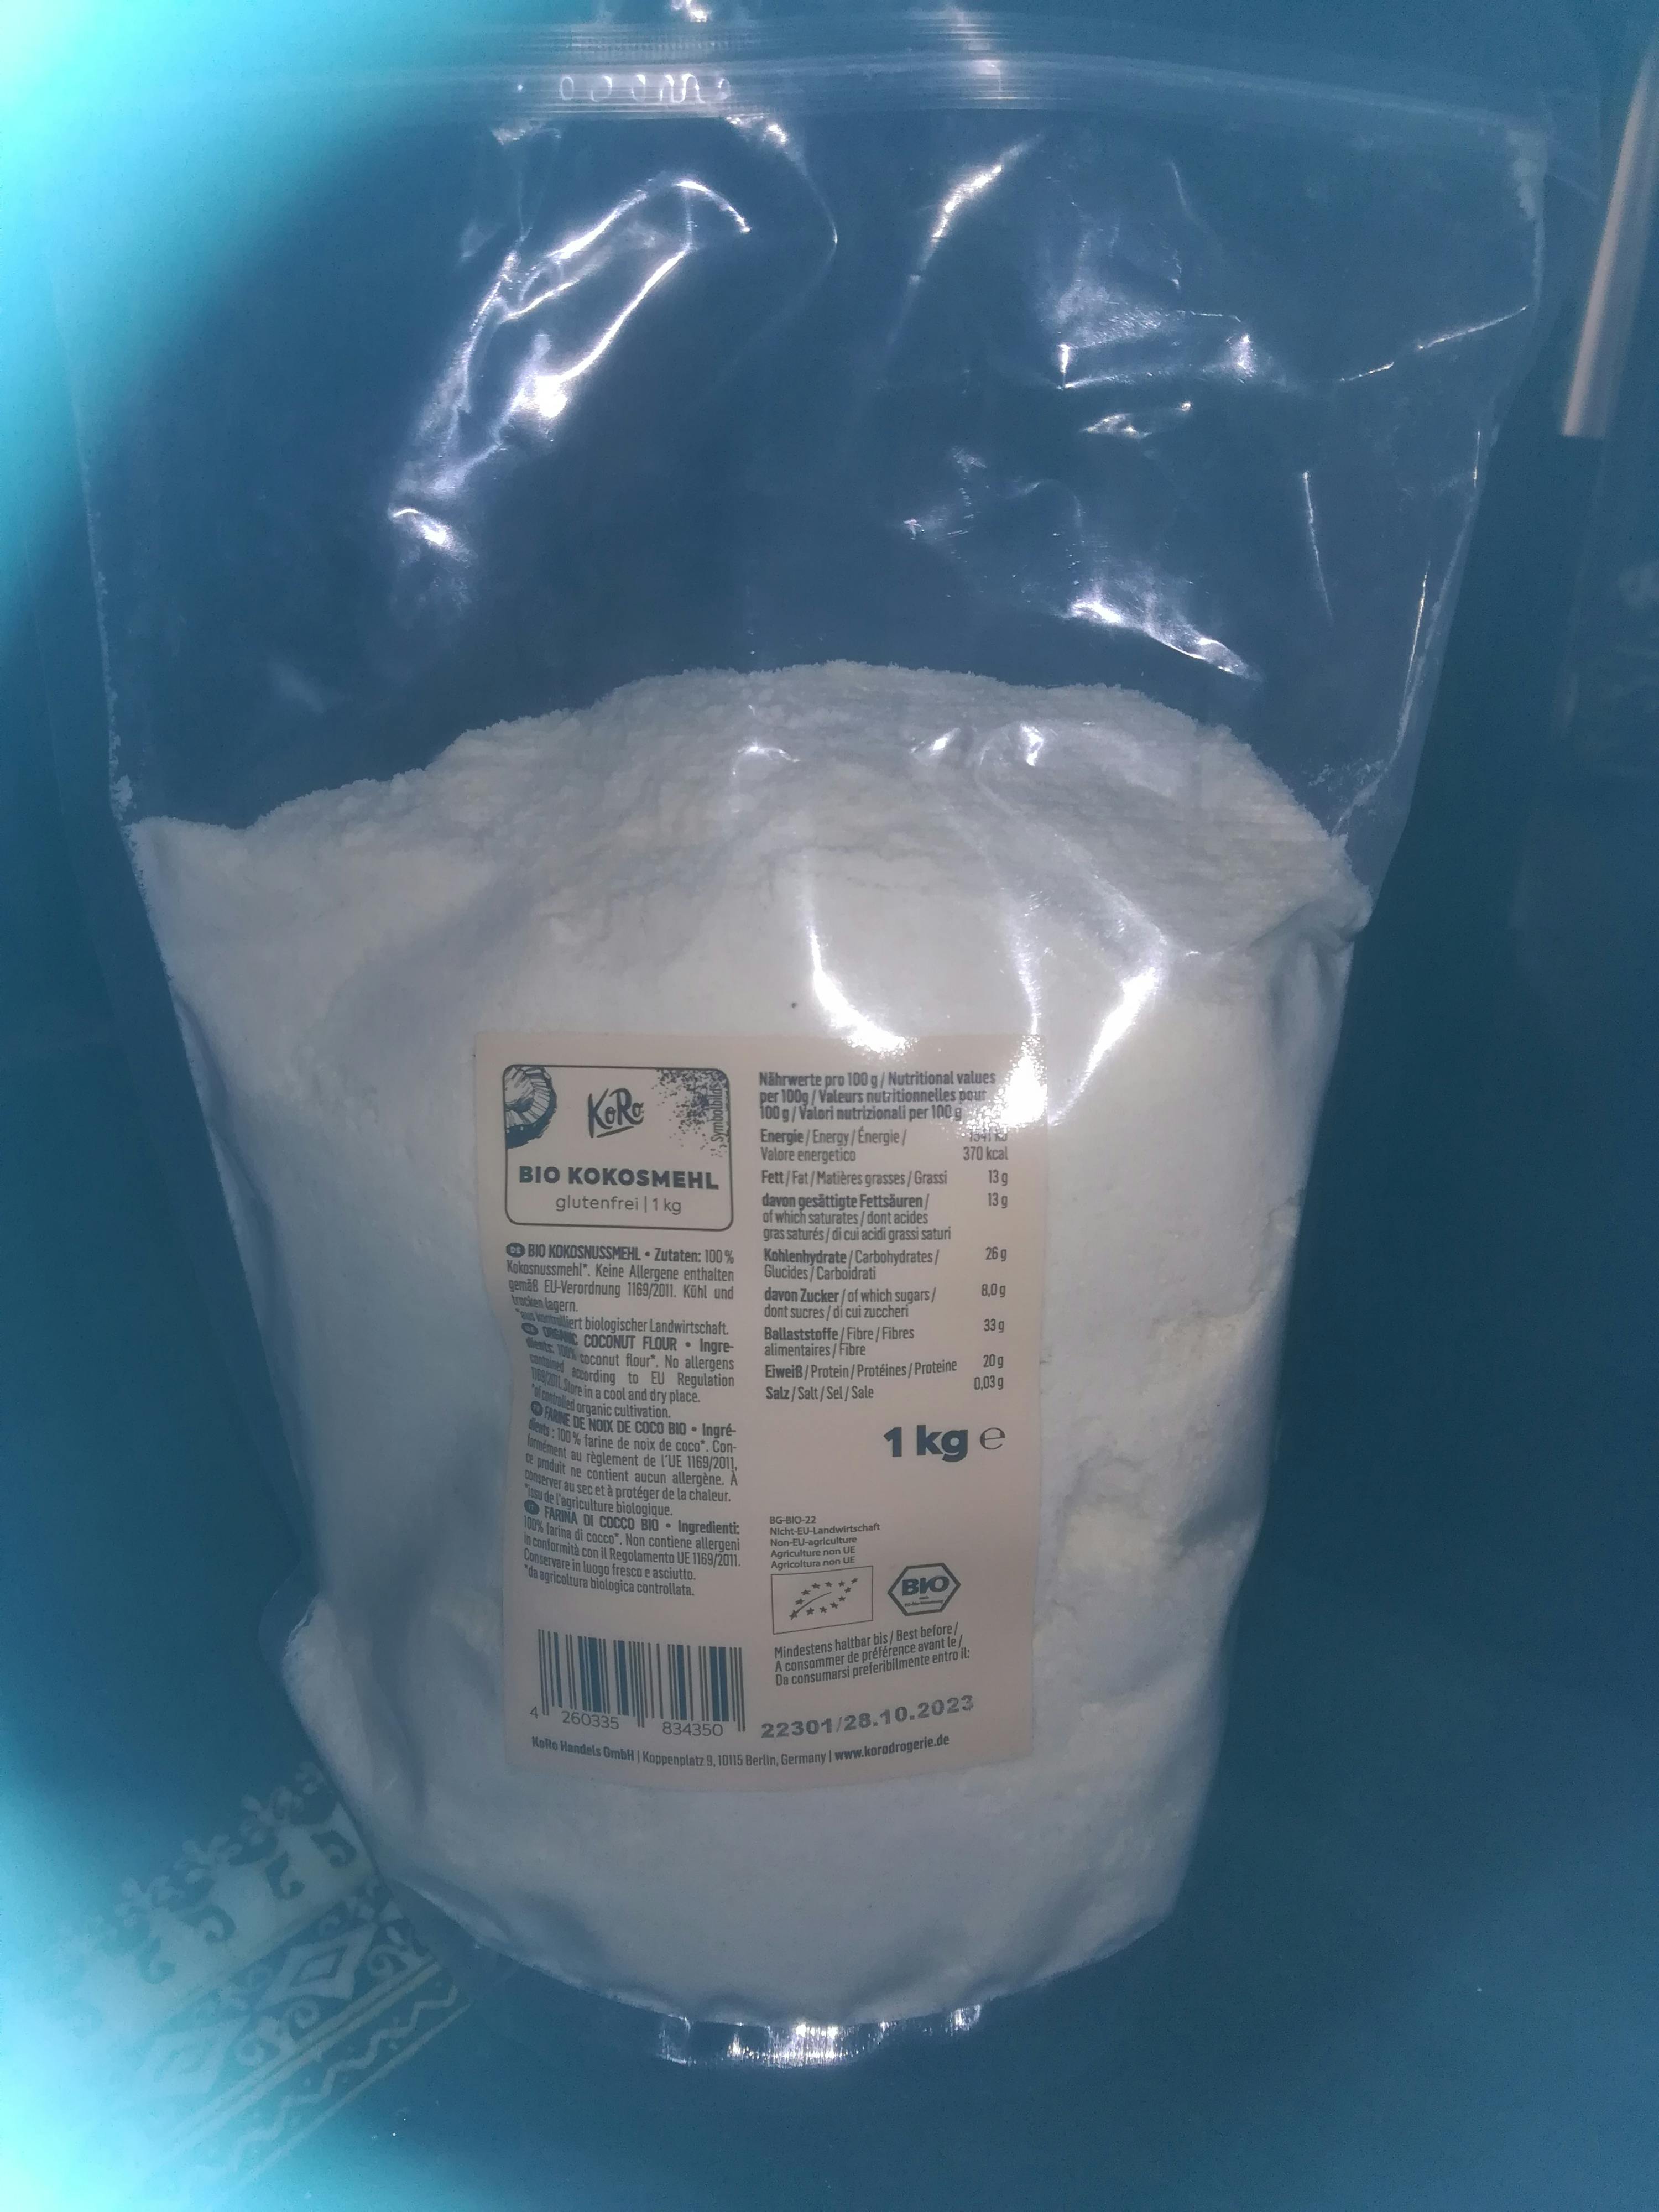 Kamelur 1kg farine de coco BIO déshuilée - farine de coco faible